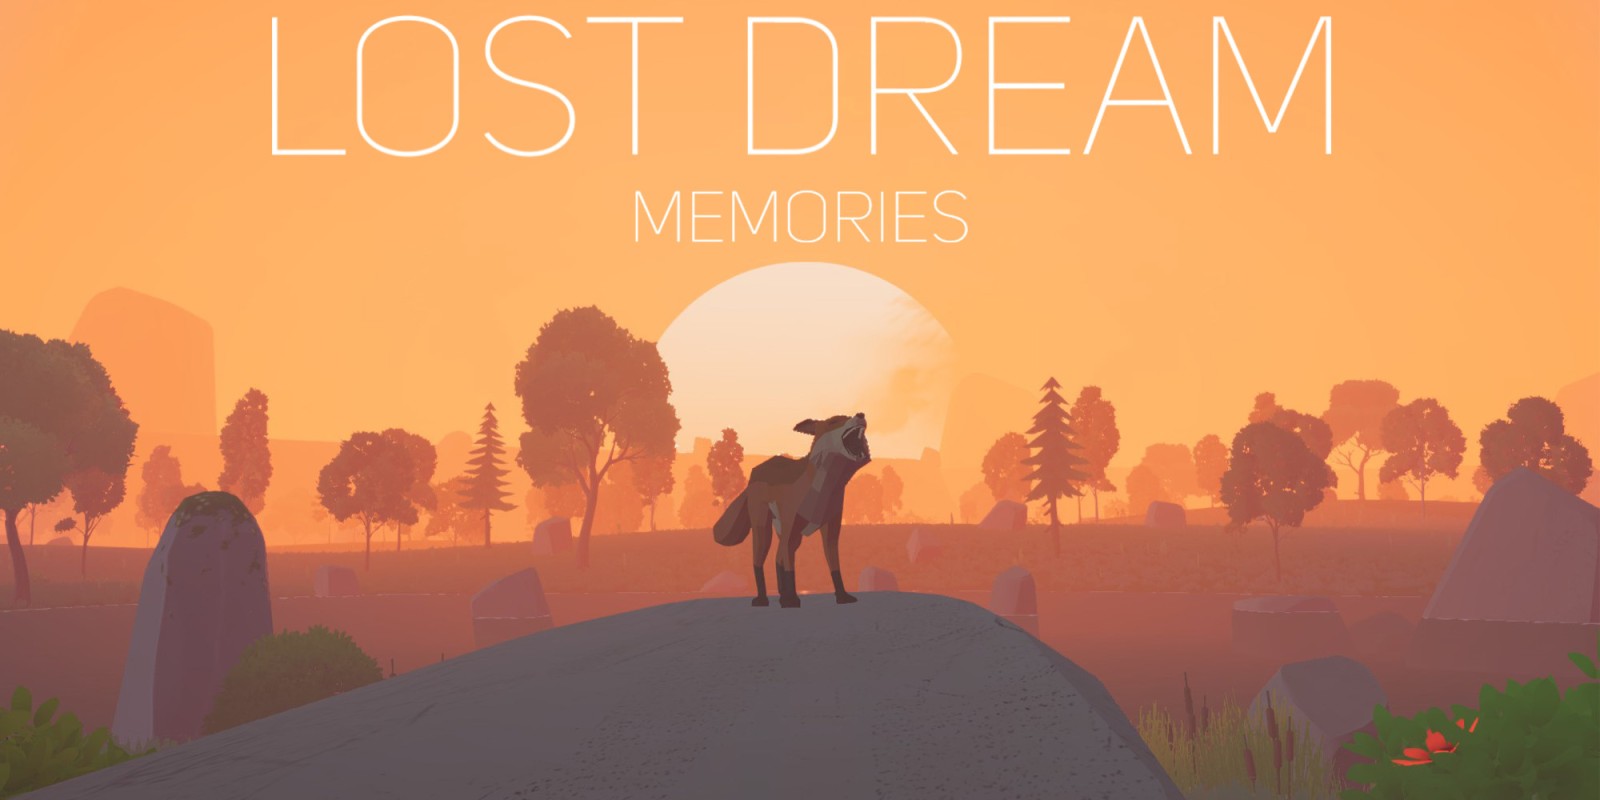 Lost Dream: Memories